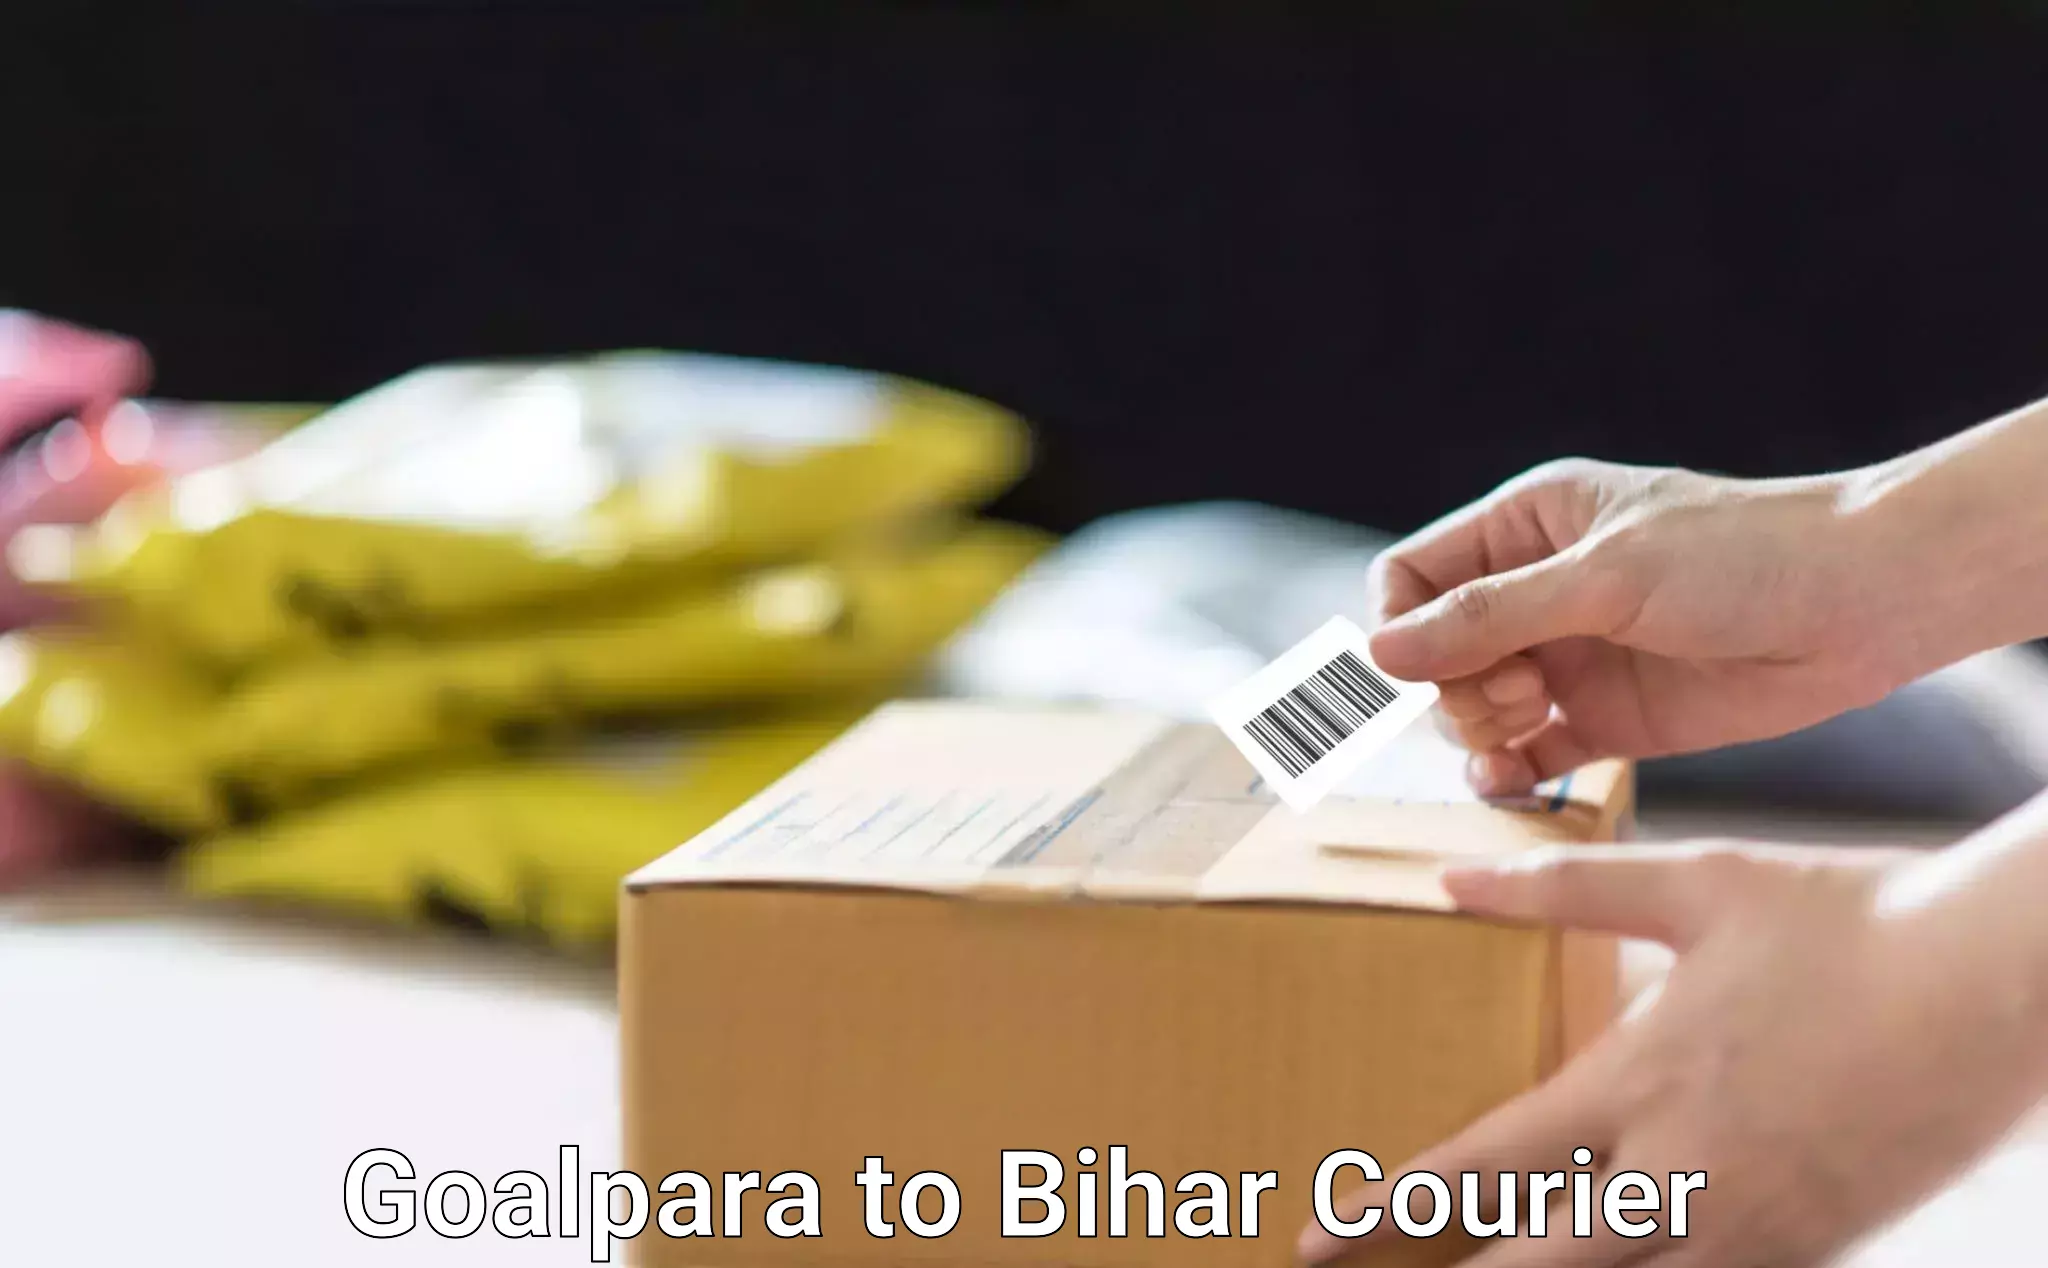 Courier service innovation Goalpara to Bihar